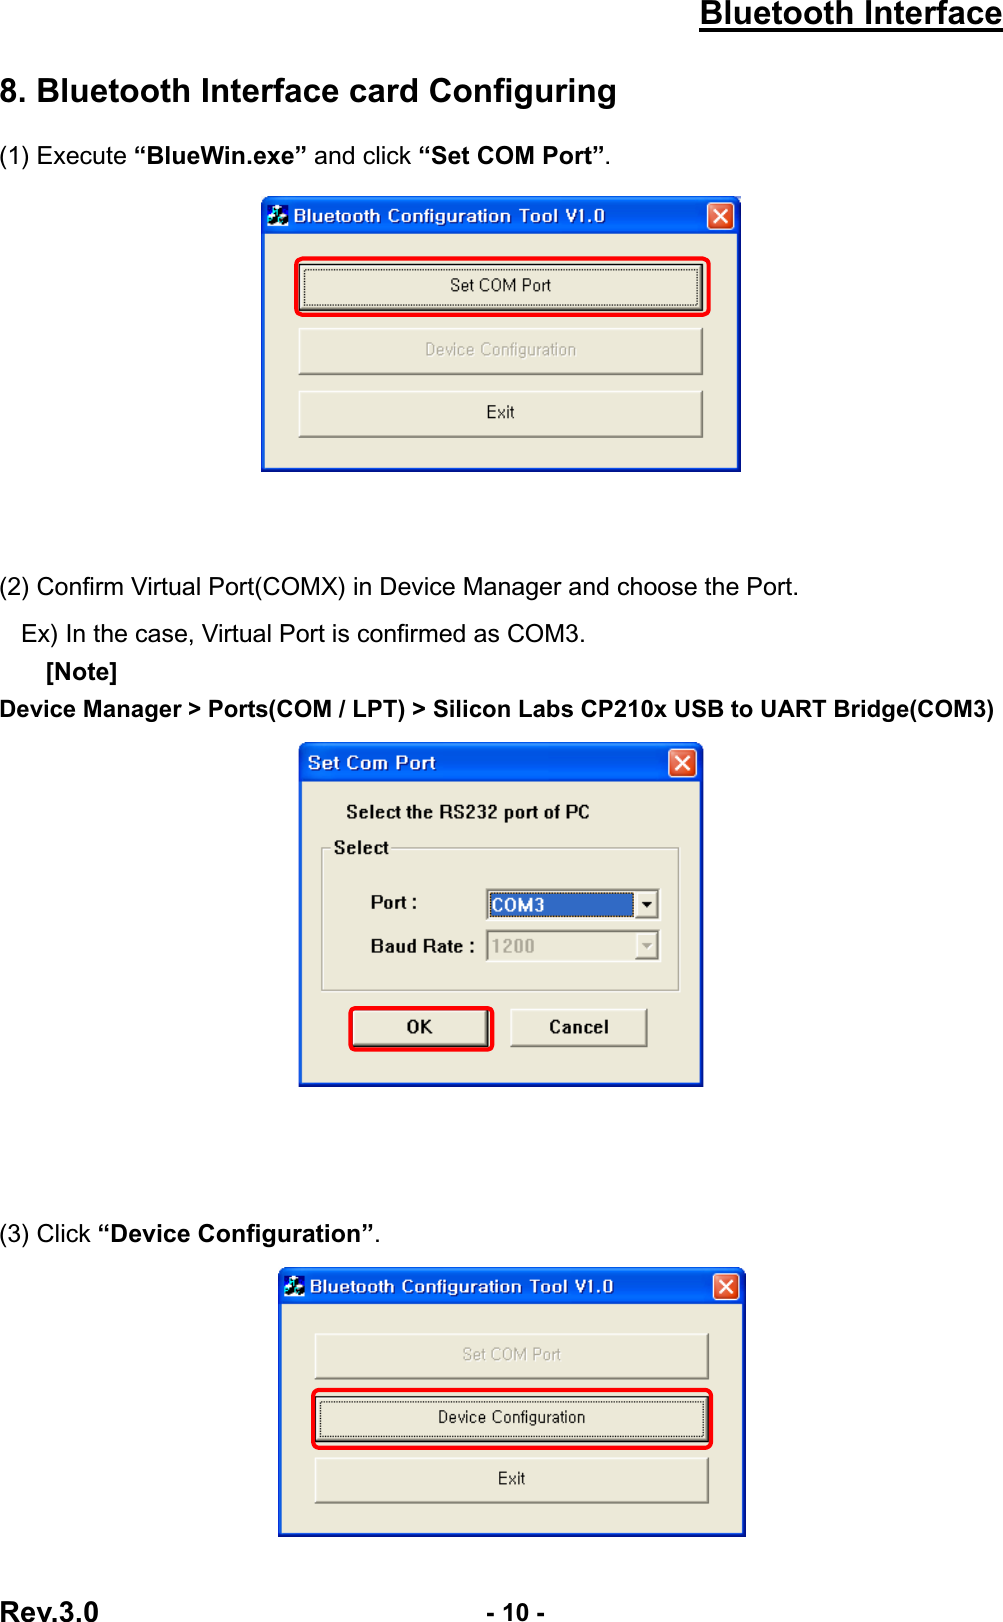 Bluetooth InterfaceRev.3.0  - 10 -8. Bluetooth Interface card Configuring (1) Execute “BlueWin.exe” and click “Set COM Port”.(2) Confirm Virtual Port(COMX) in Device Manager and choose the Port. Ex) In the case, Virtual Port is confirmed as COM3.     [Note]Device Manager &gt; Ports(COM / LPT) &gt; Silicon Labs CP210x USB to UART Bridge(COM3) (3) Click “Device Configuration”.